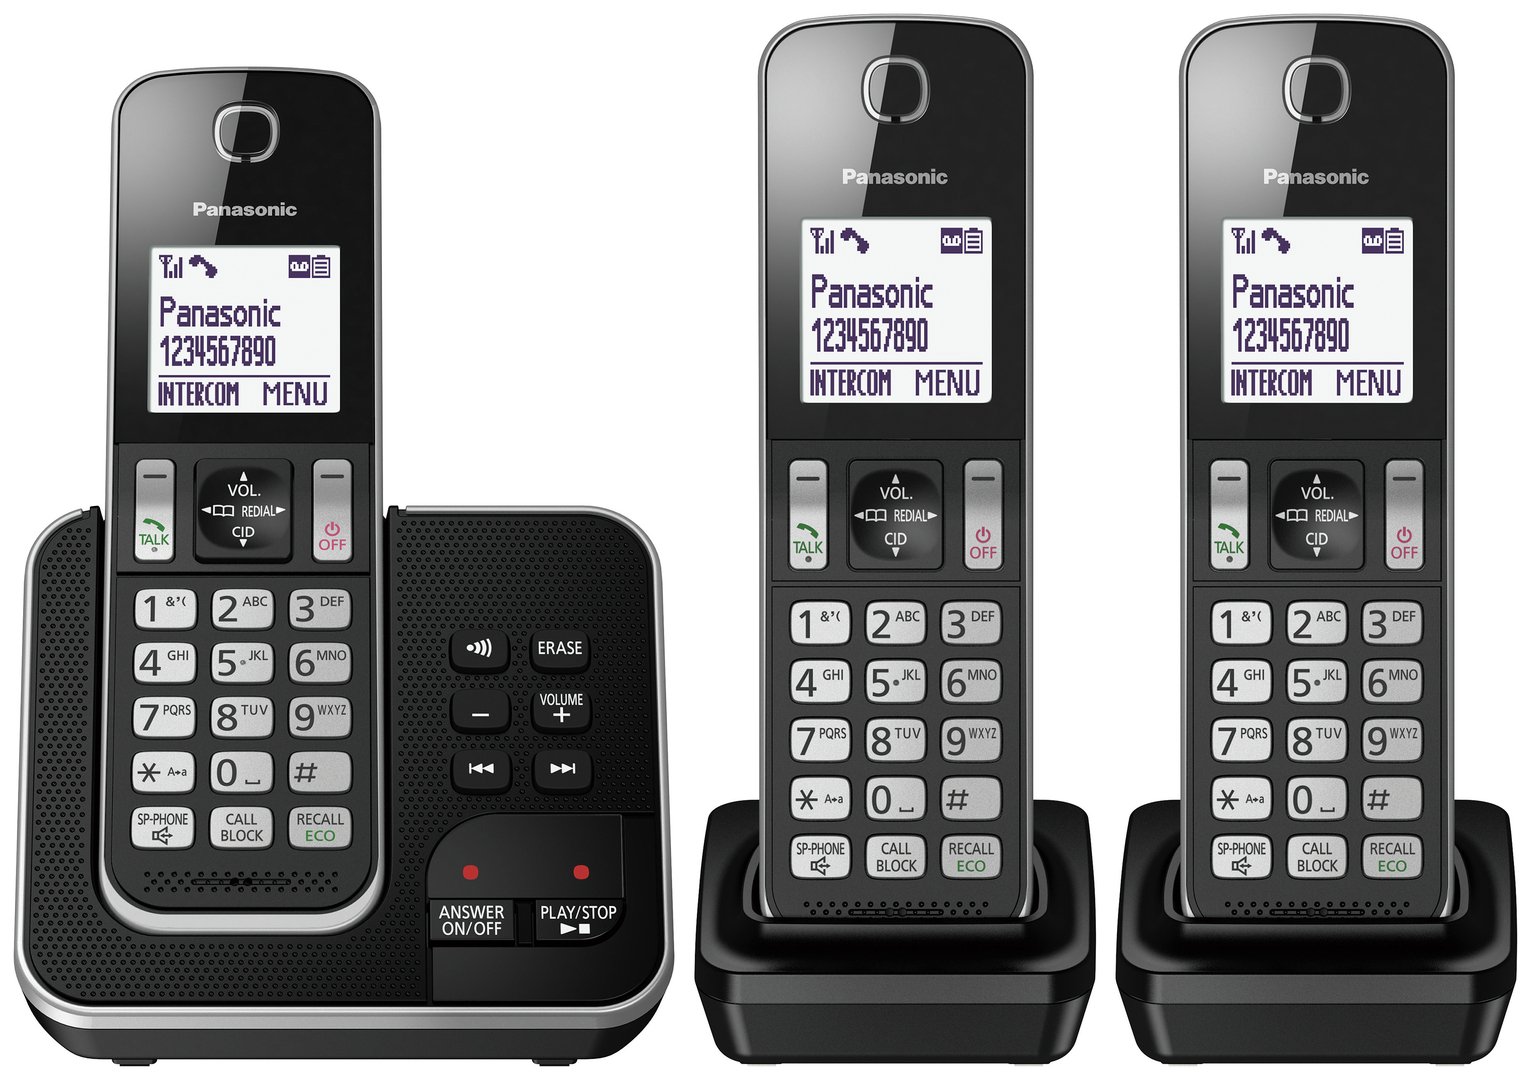 Panasonic Cordless Telephone with Answer Machine Review